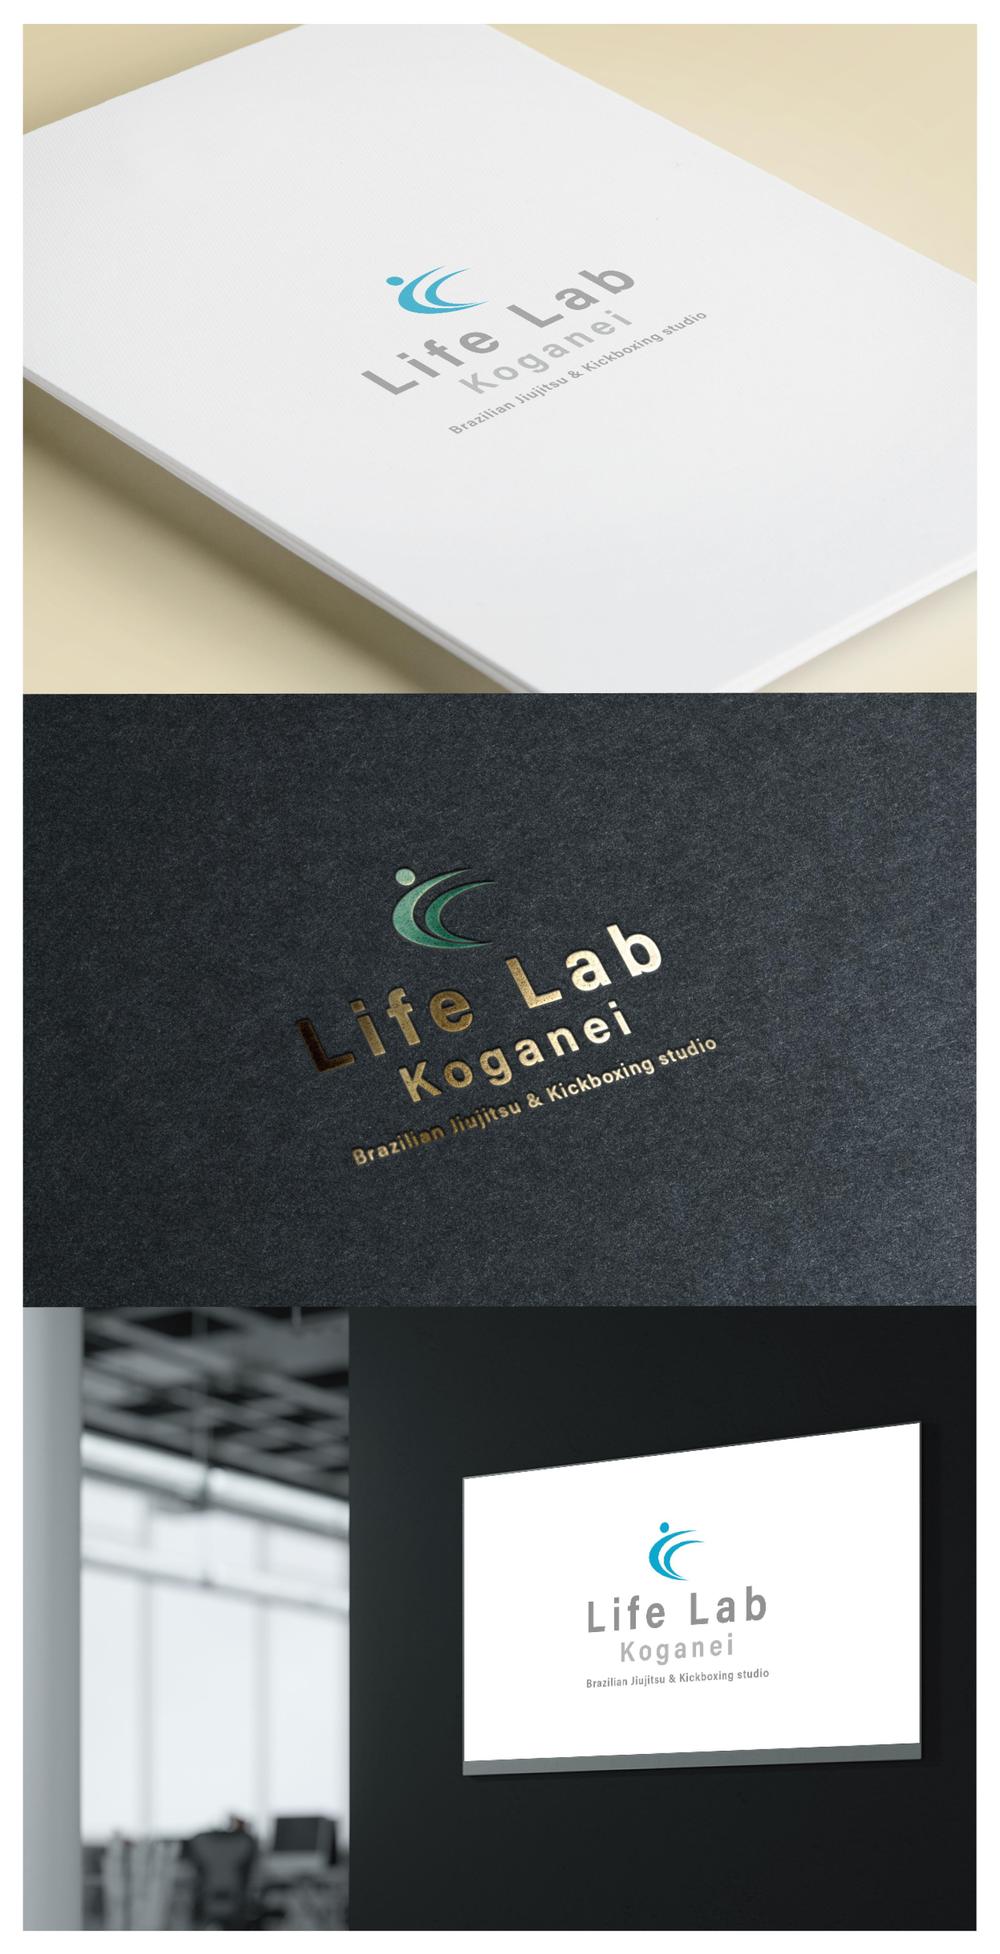 Life Lab_logo04_01.jpg